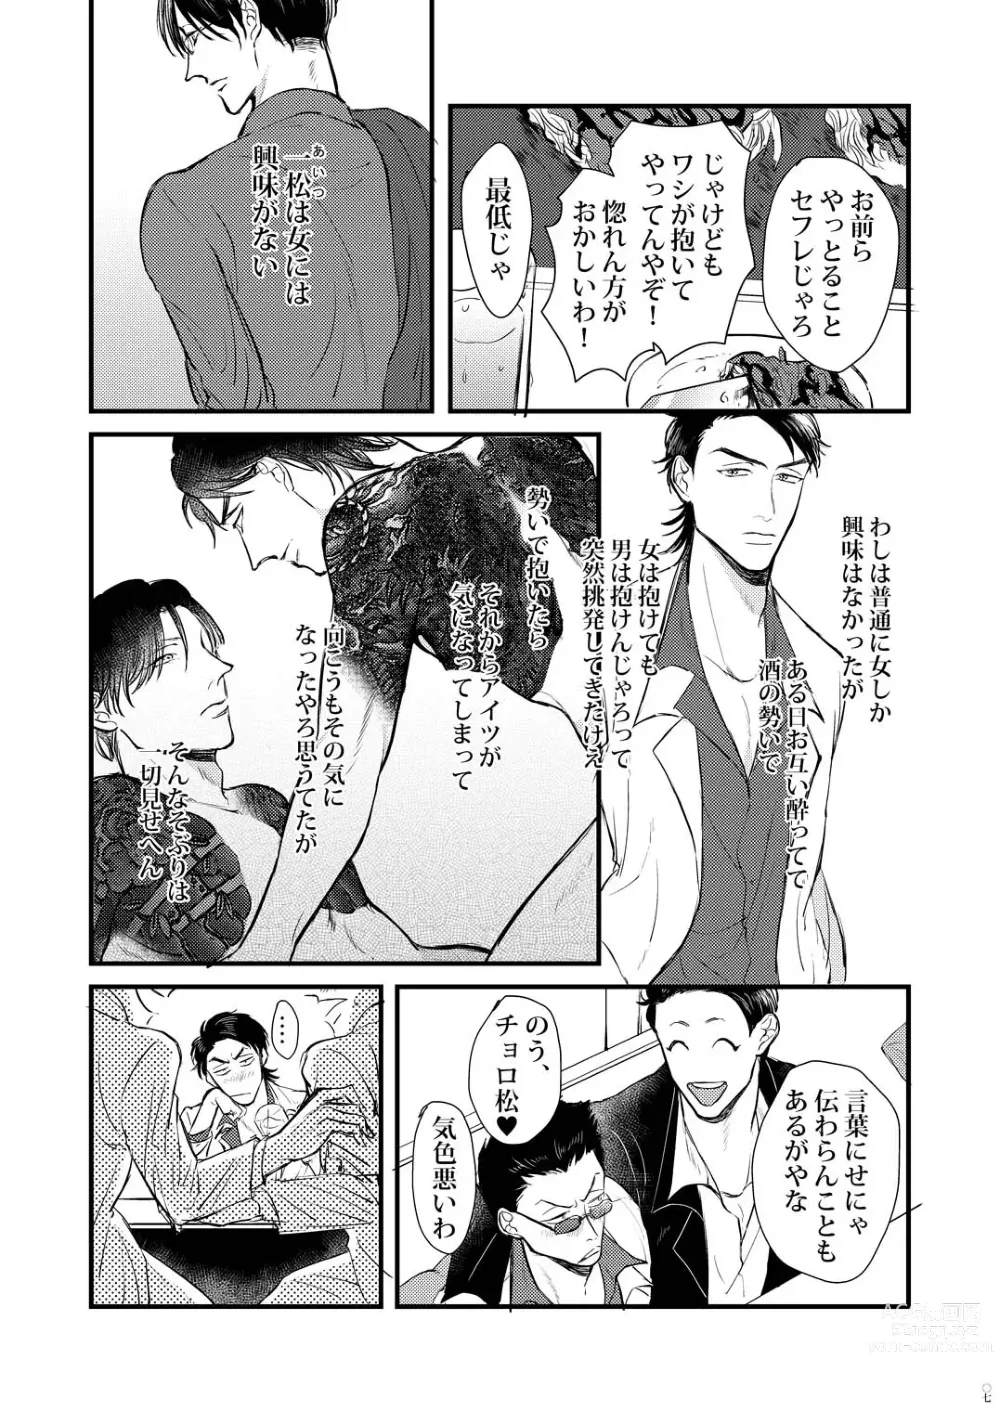 Page 6 of doujinshi Kagerou